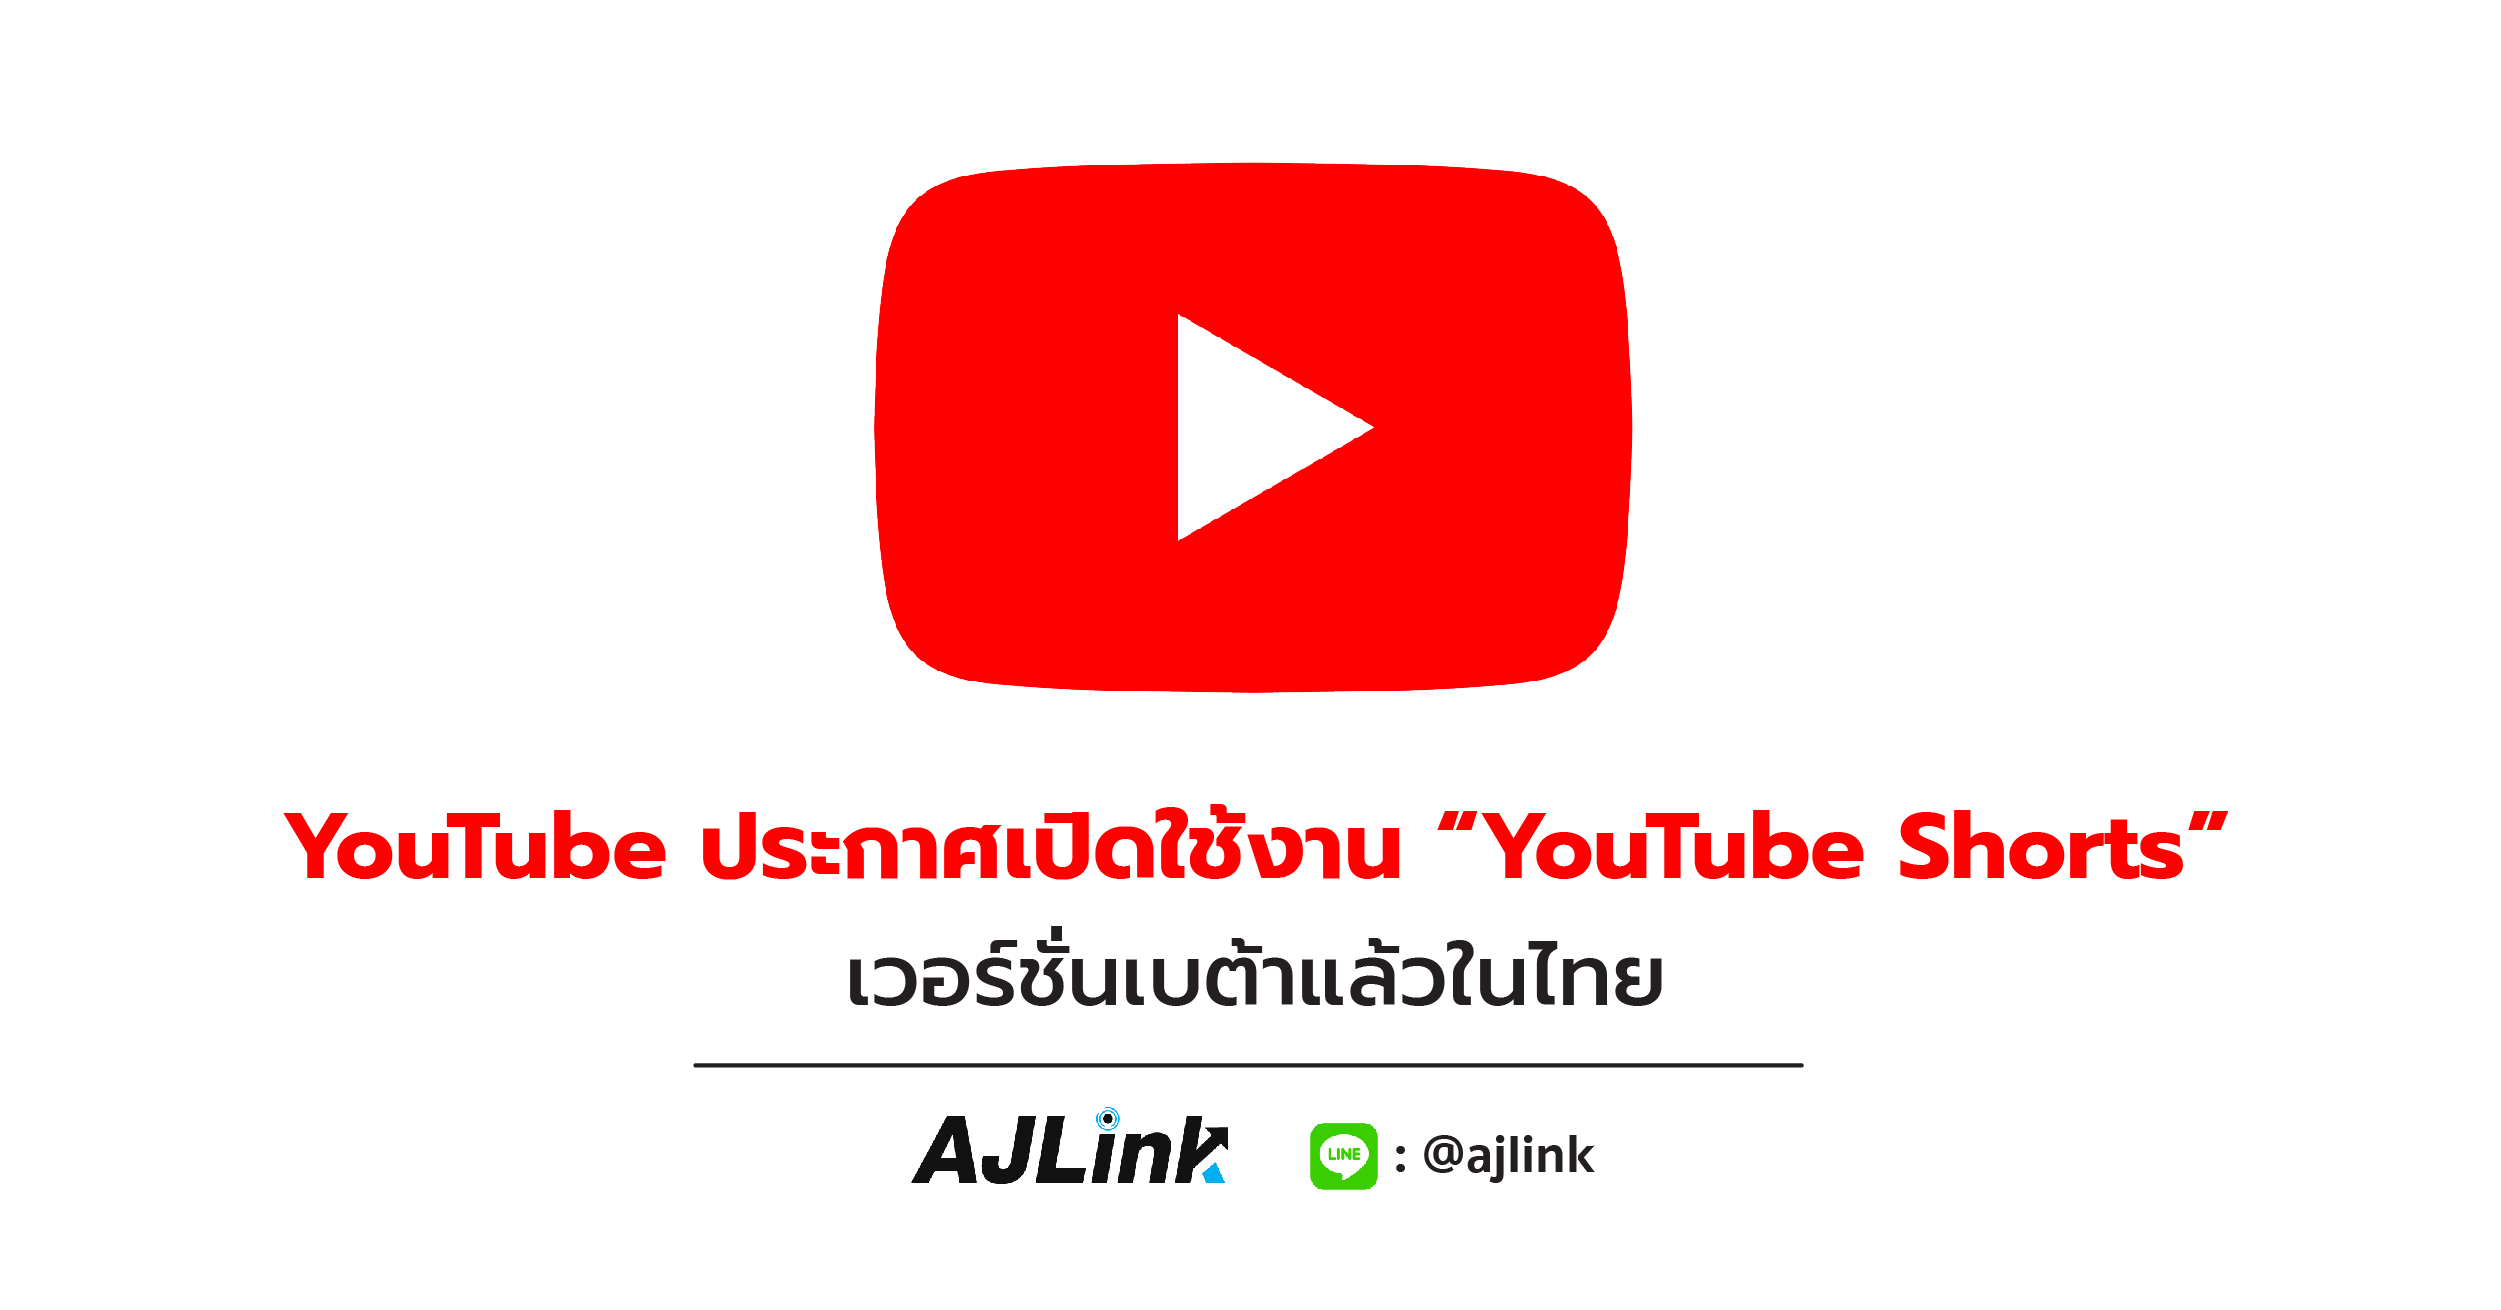 YouTube ประกาศเปิดใช้งาน “YouTube Shorts” เวอร์ชันเบต้าแล้วในไทย